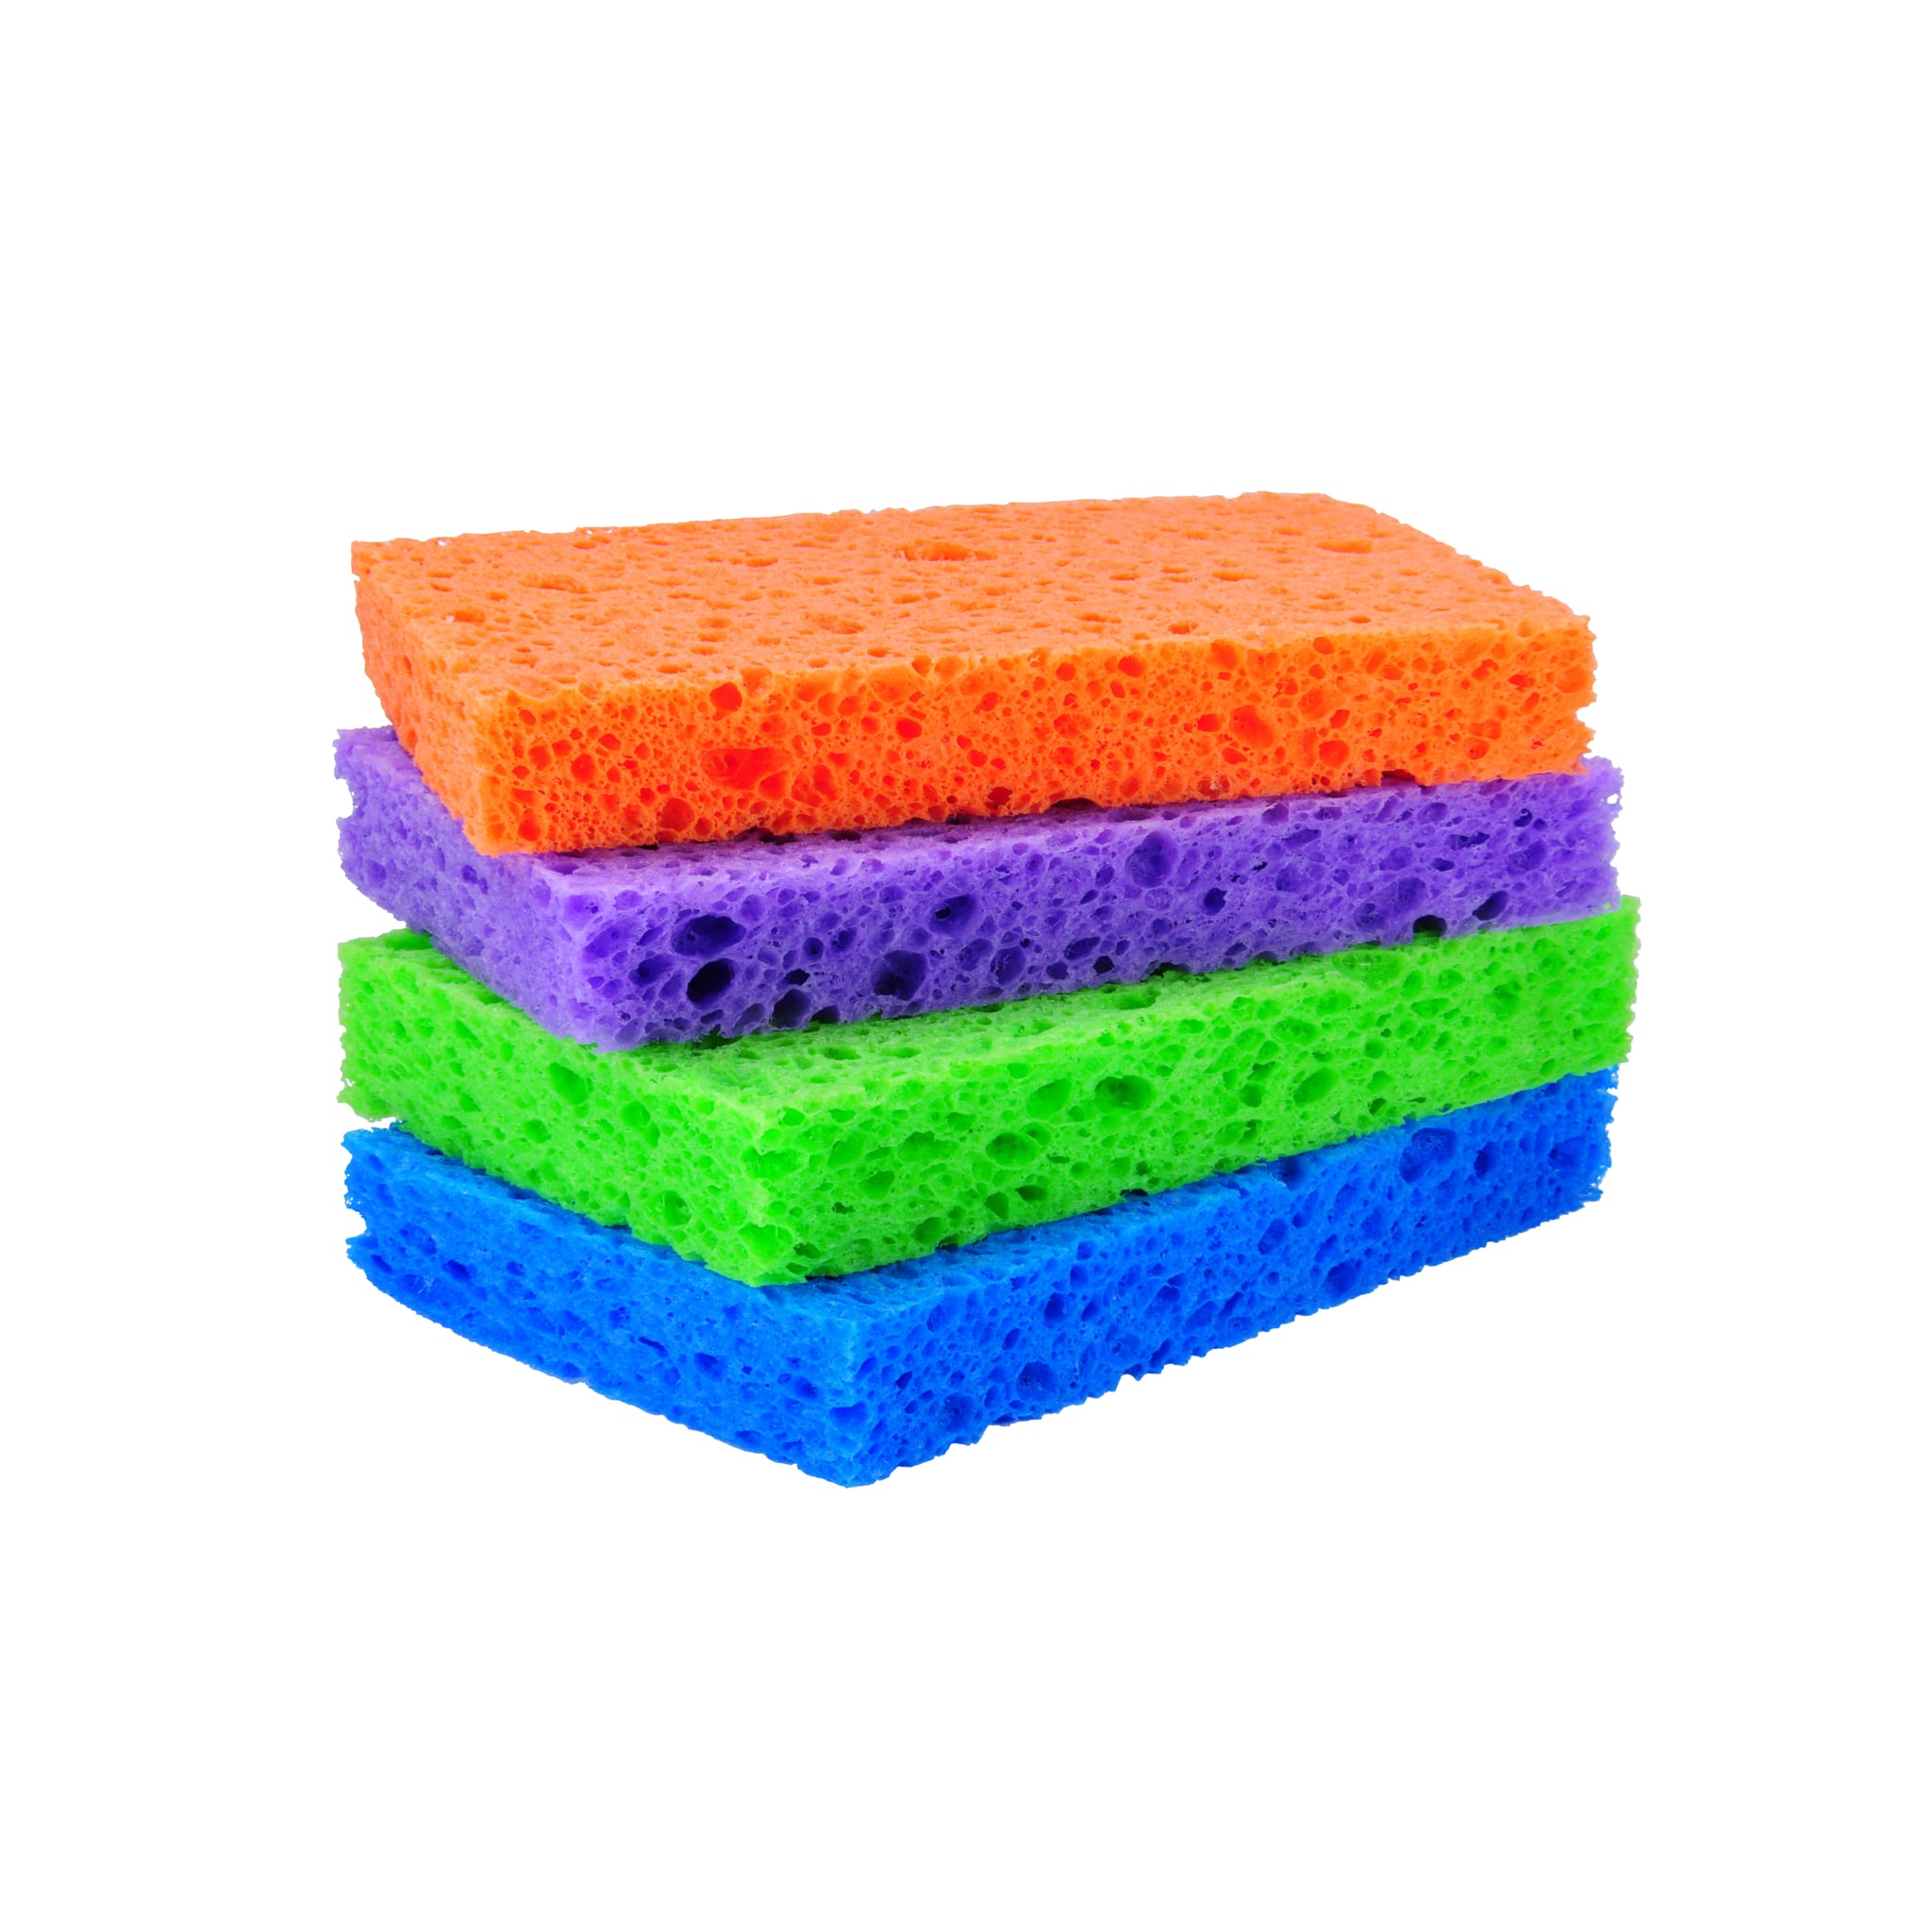 How to Clean a Sponge | POPSUGAR Smart Living